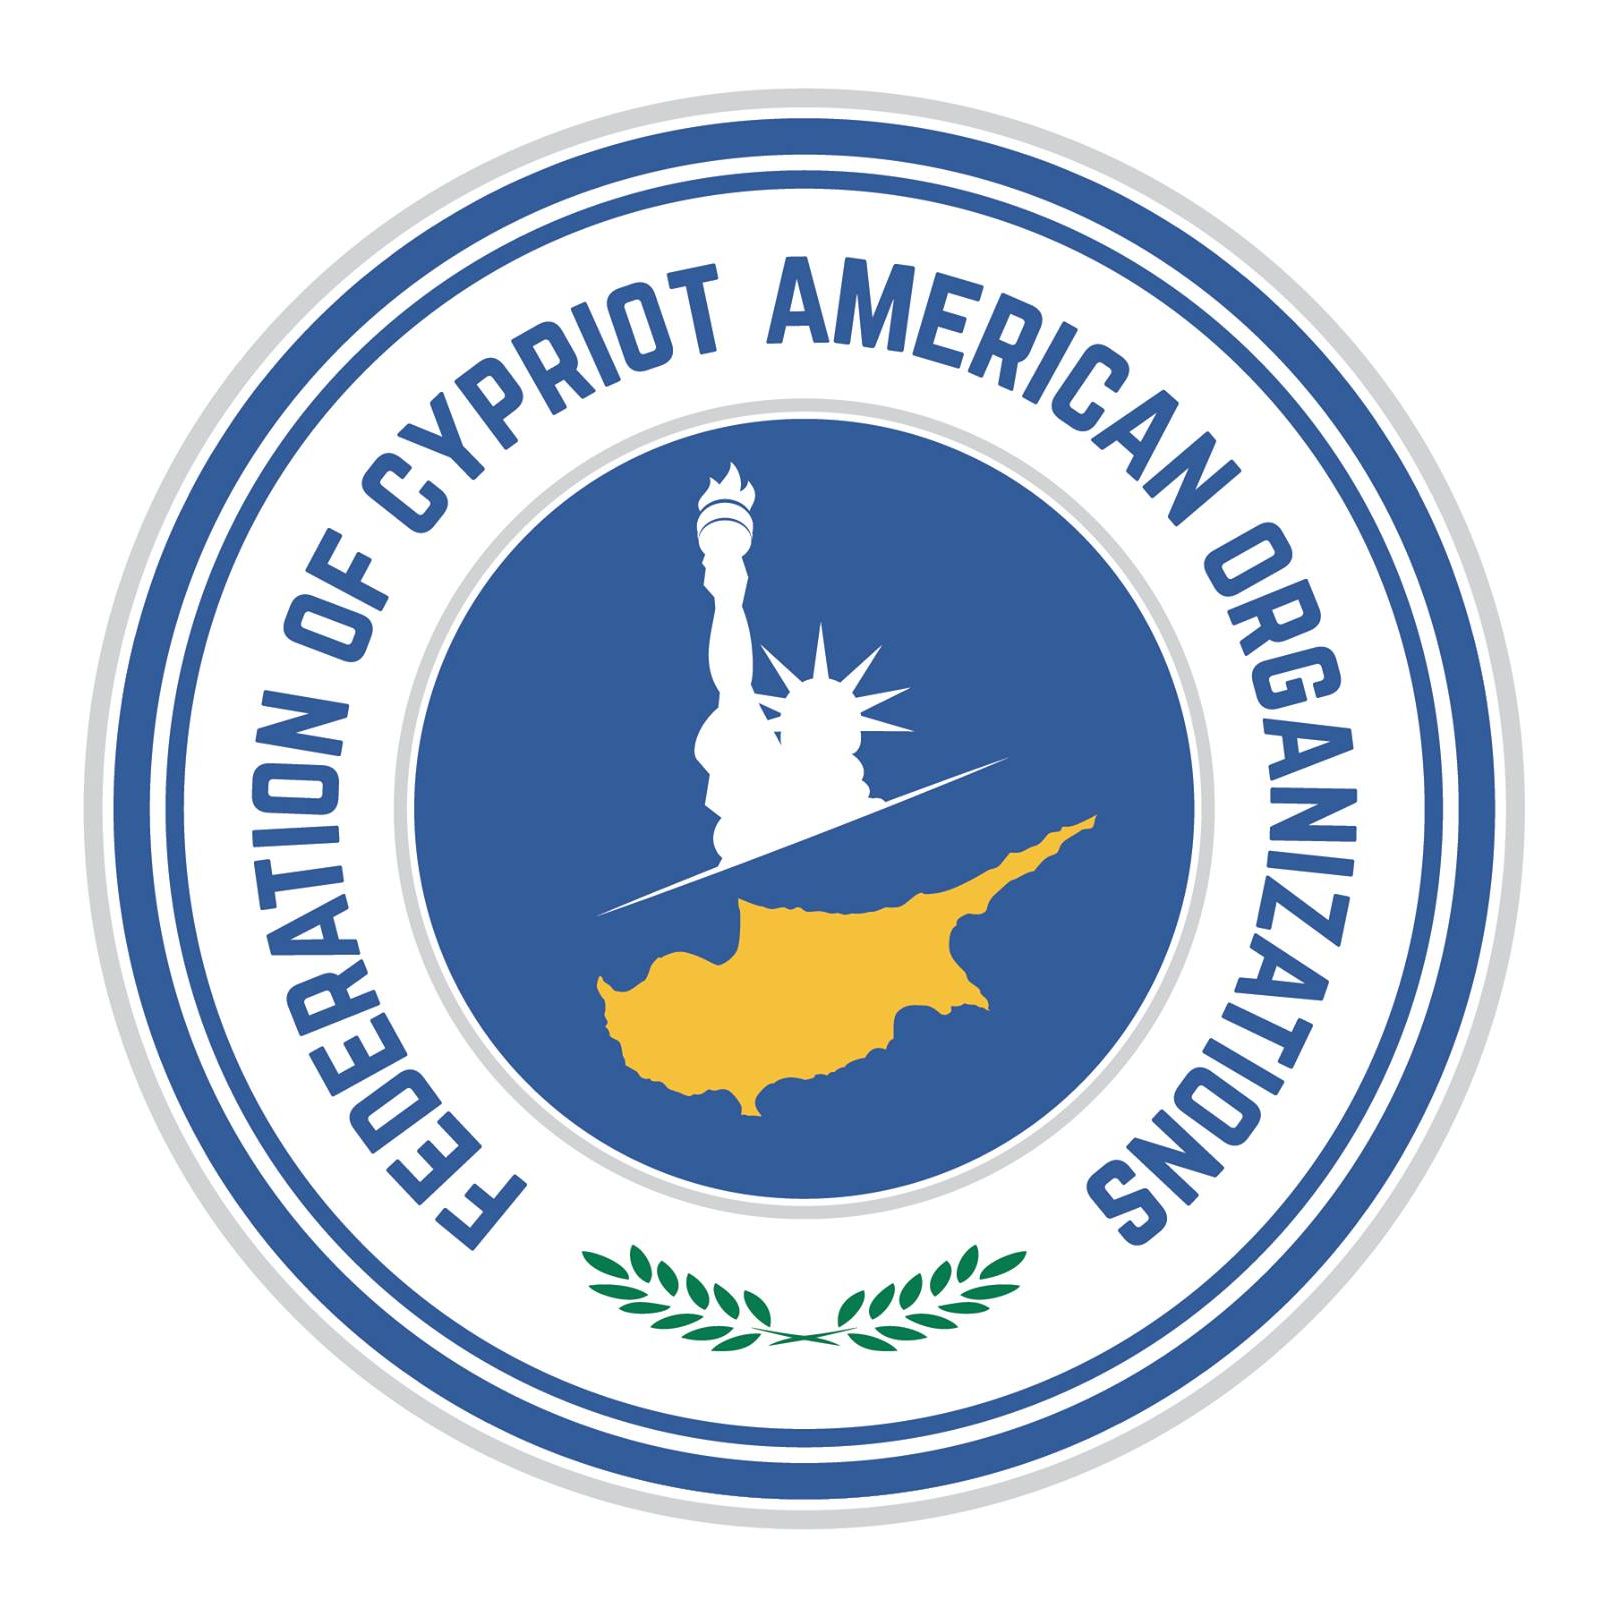 Greek Charity Organization in New York - Federation of Cypriot American Organizations